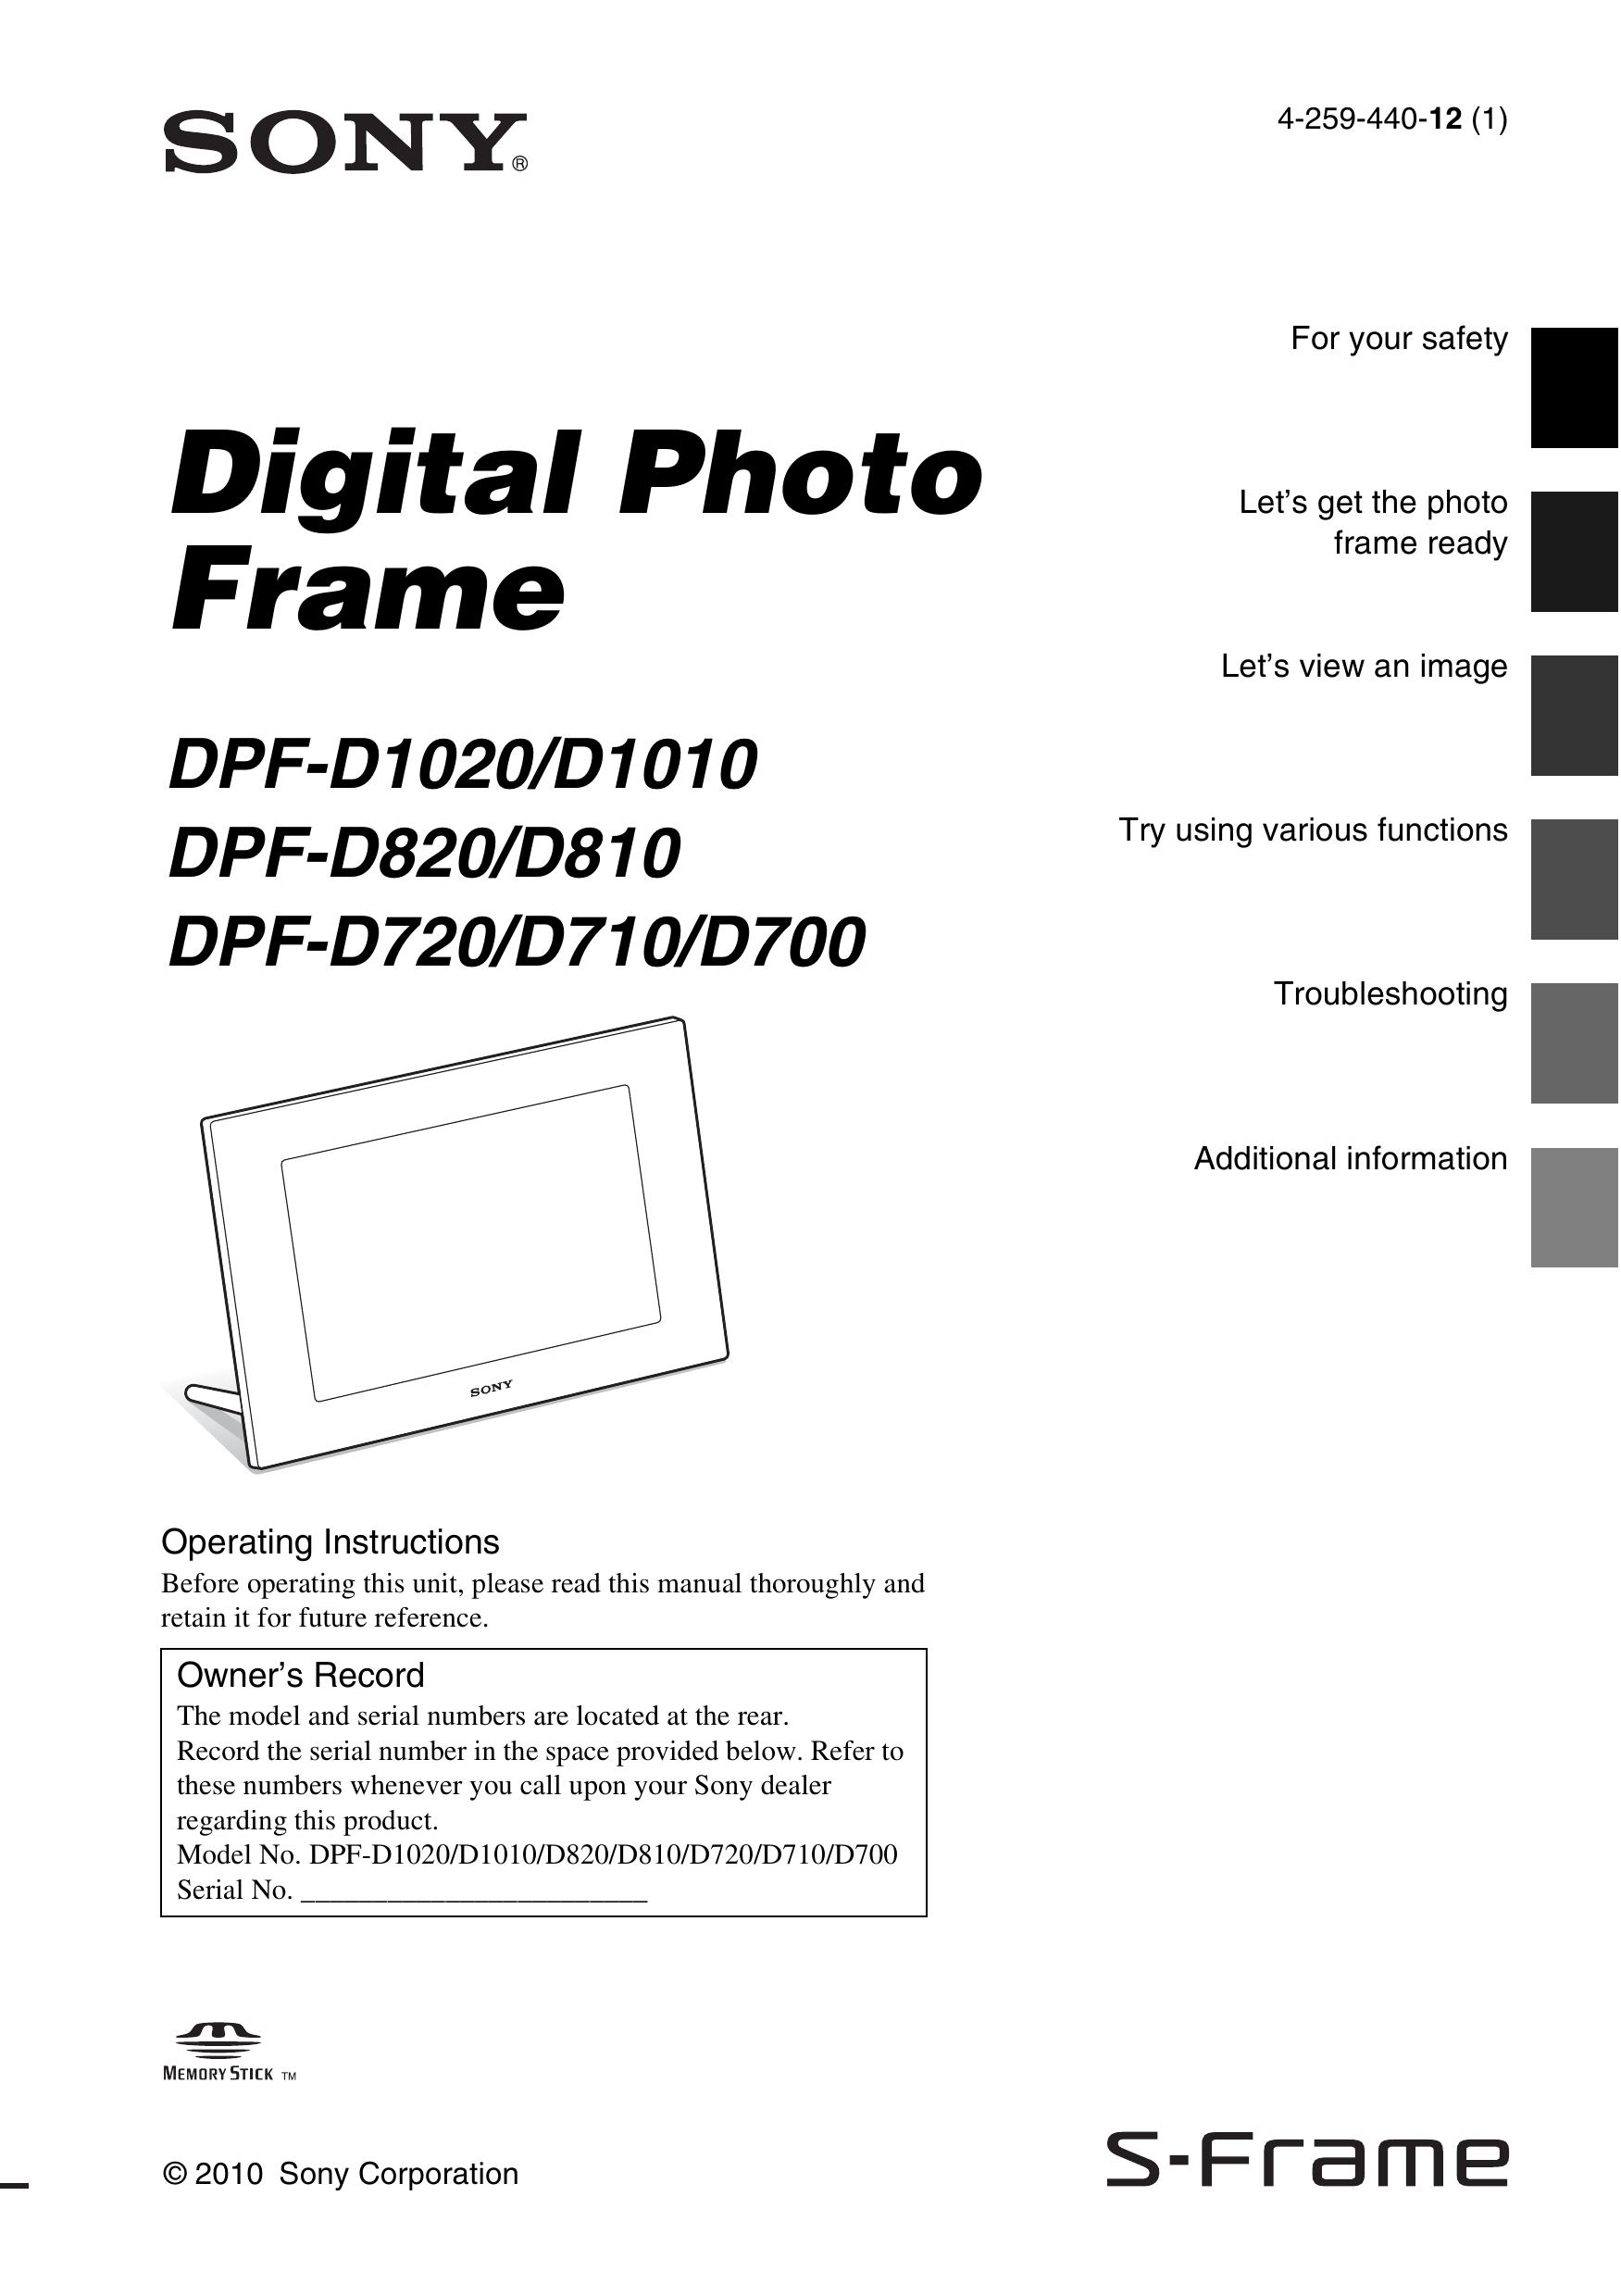 Sony D710 Digital Photo Frame User Manual